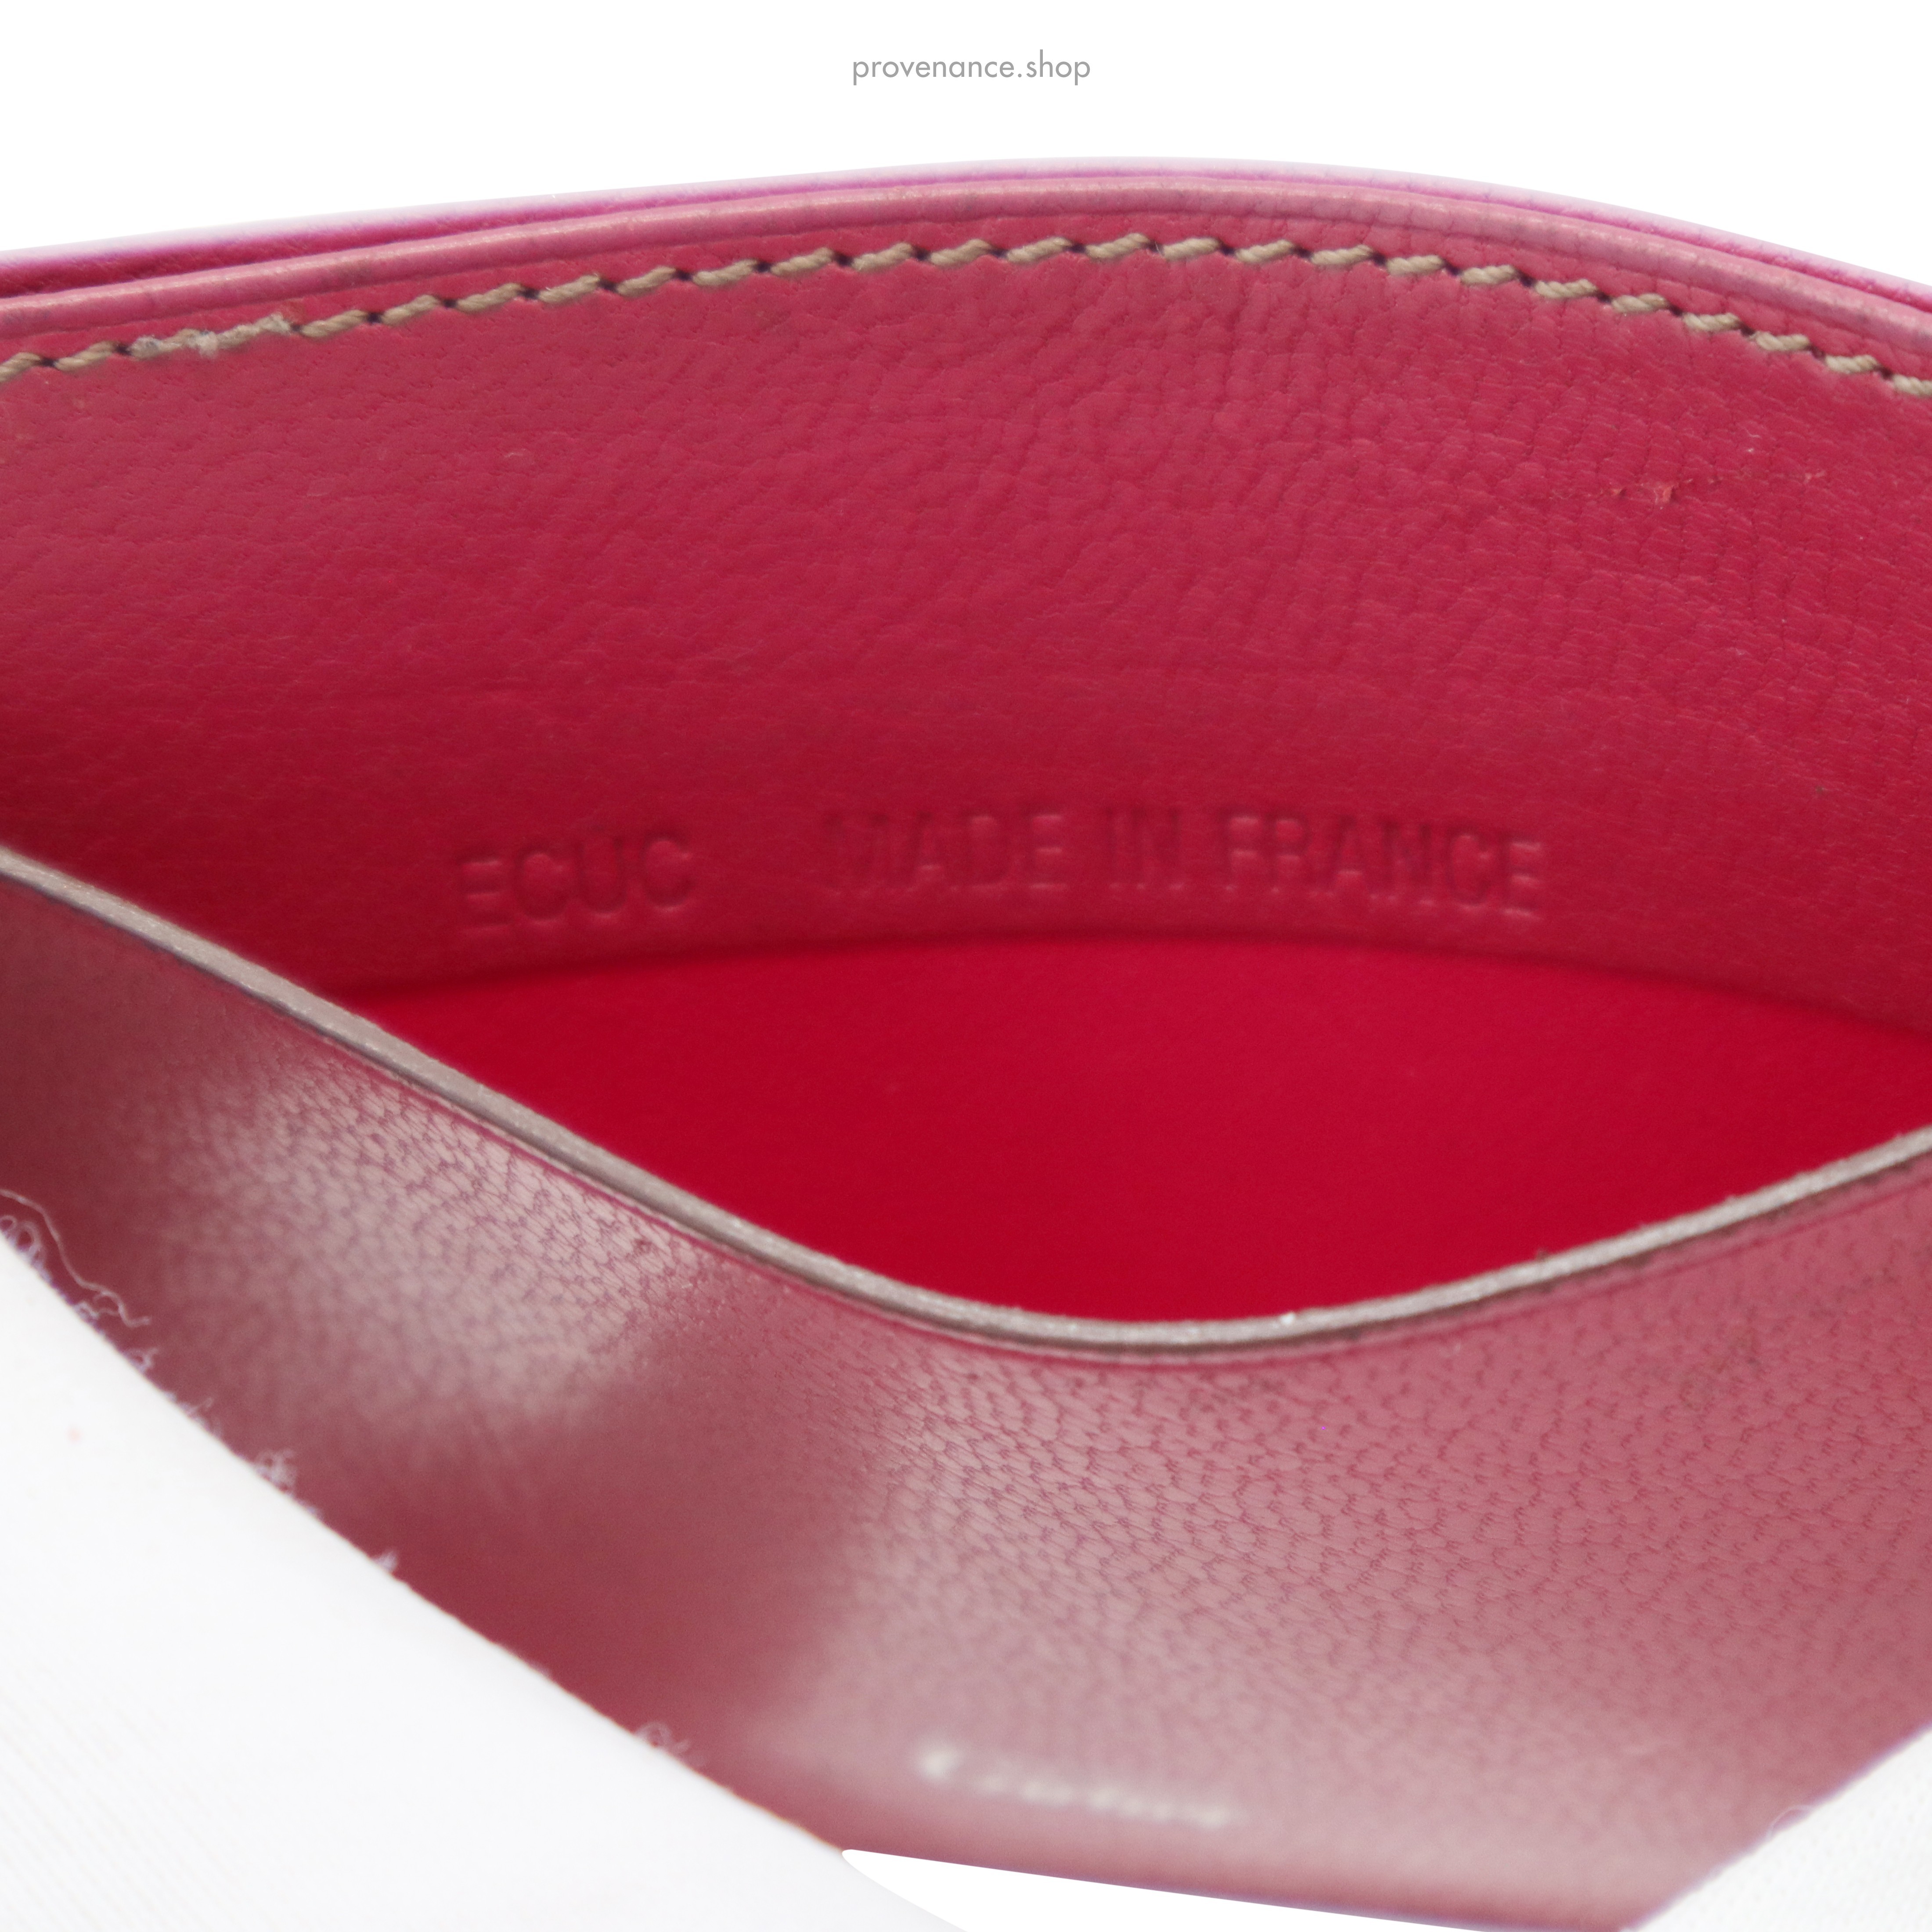 Cartier Card Holder - Raspberry Chevre Leather - 6